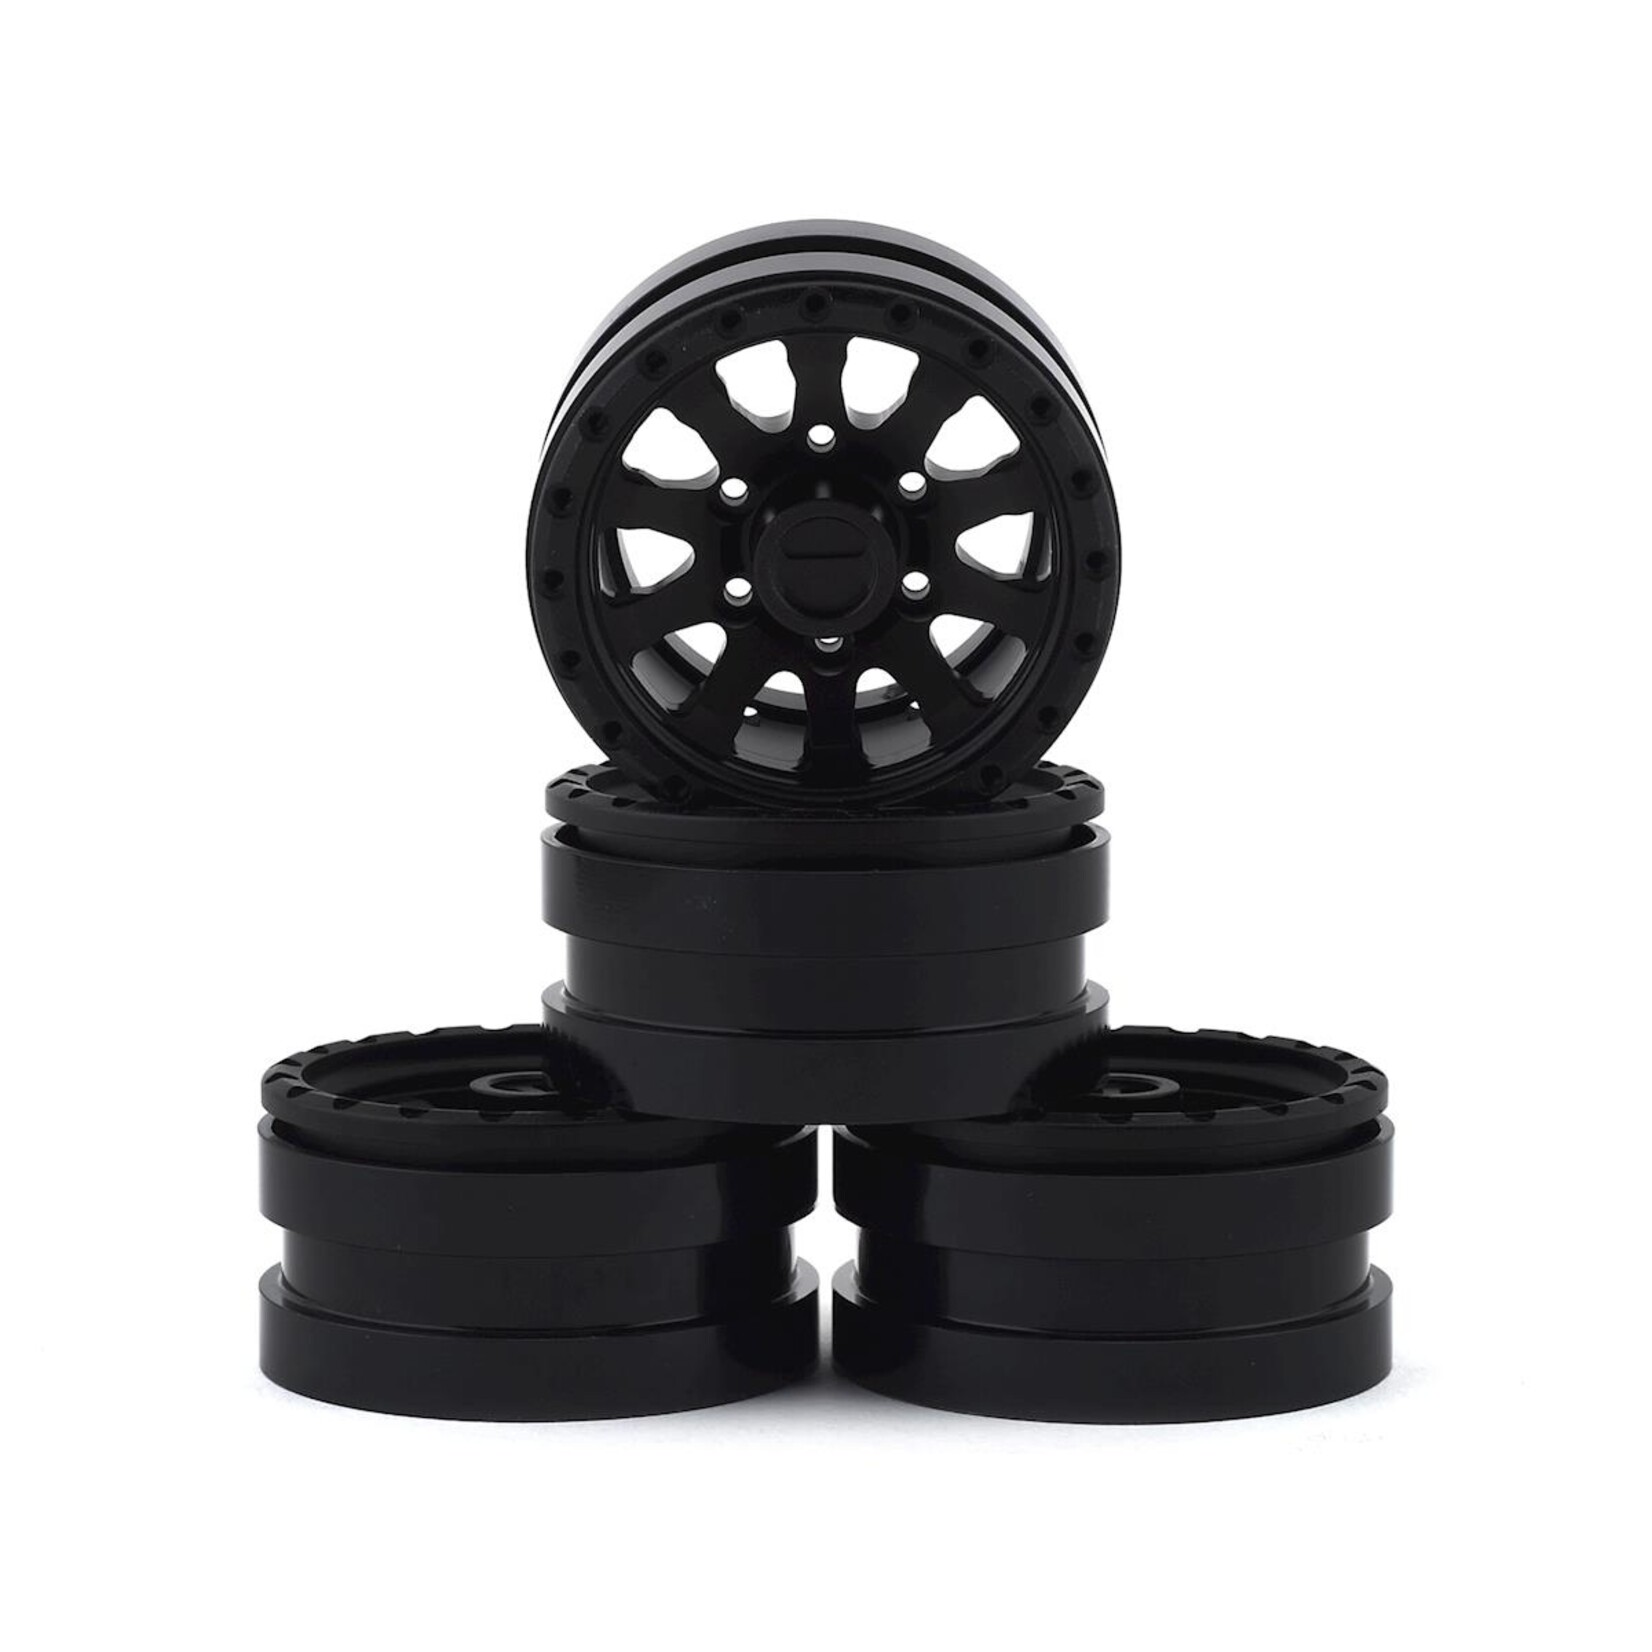 Pit Bull Pit Bull Tires Raceline Clutch 1.55 Aluminum Beadlock Crawler Wheels (Black) (4) #PBTPBW15CLBB